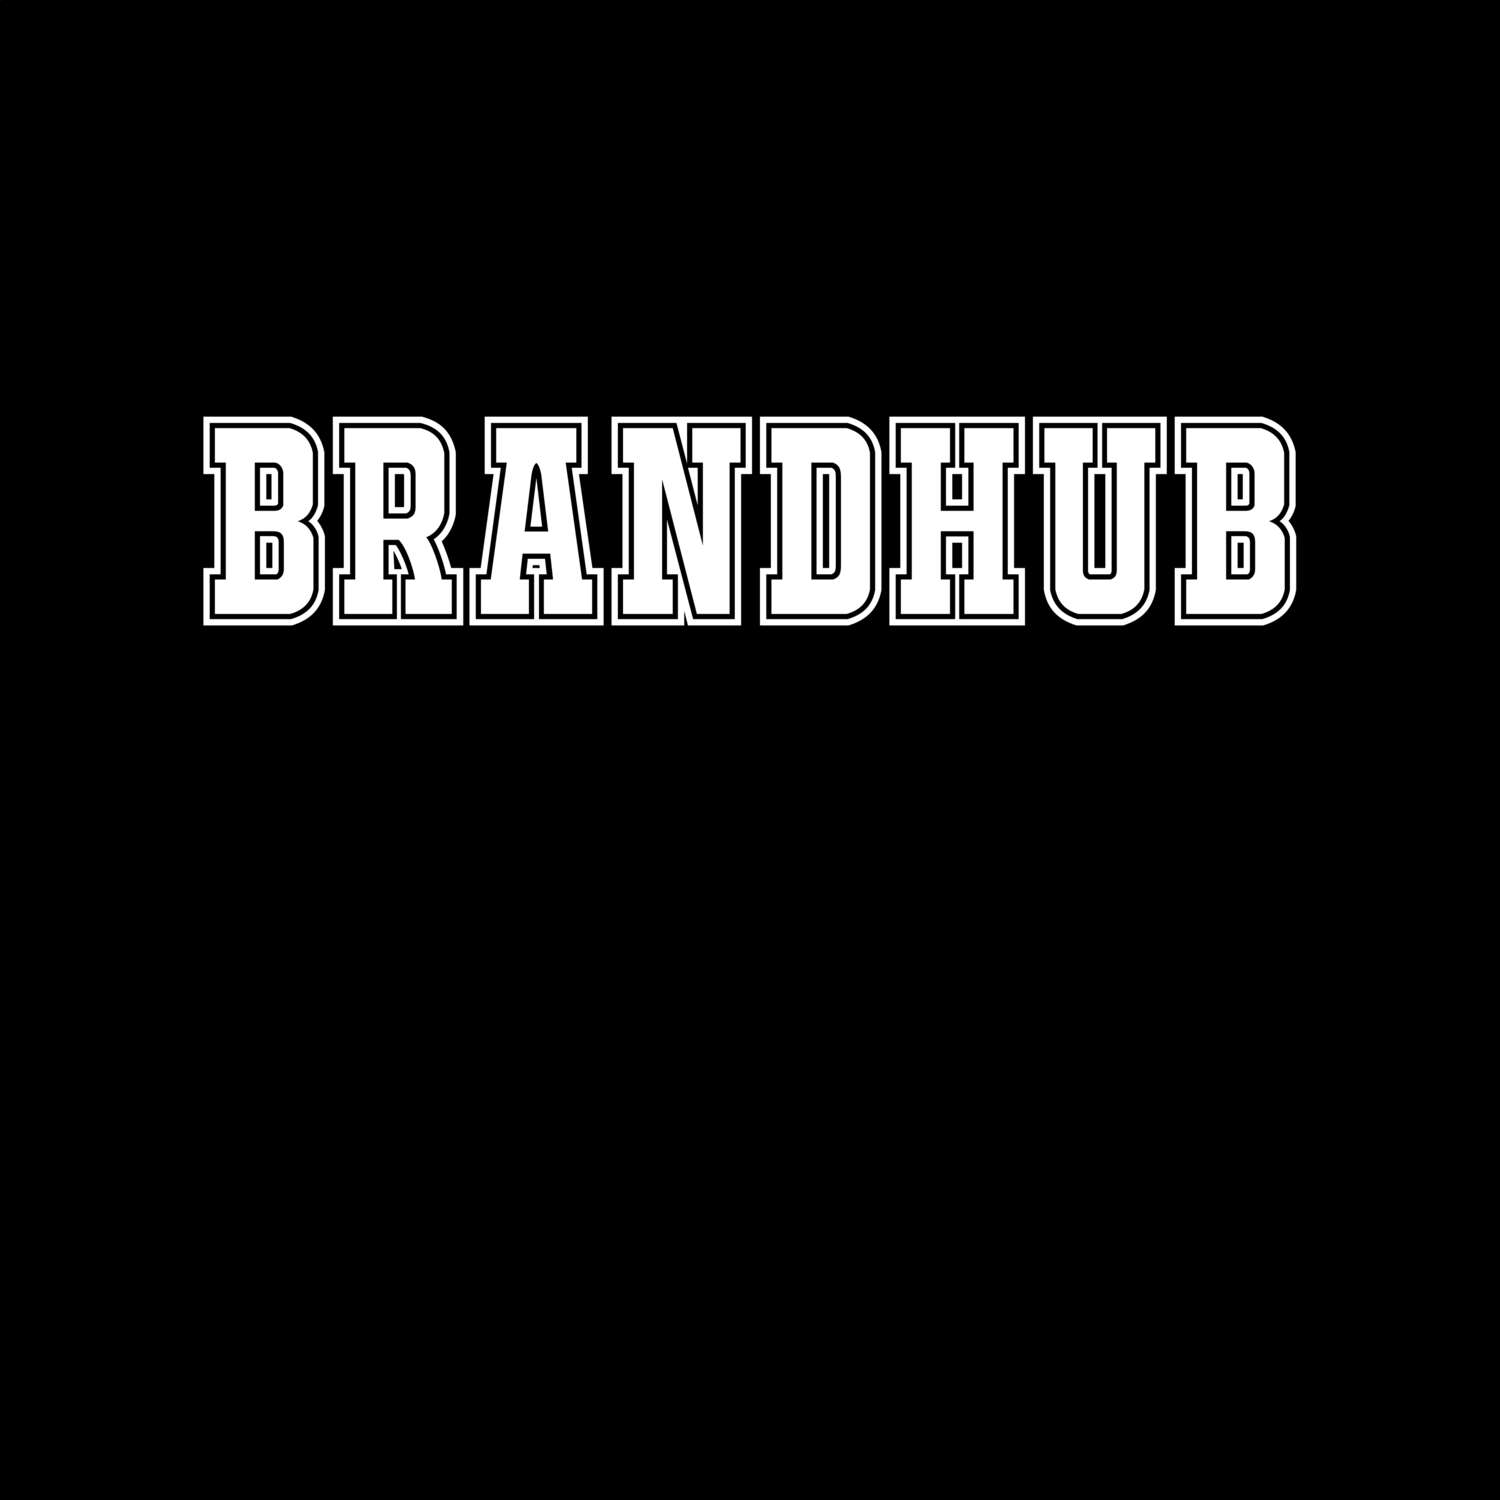 Brandhub T-Shirt »Classic«